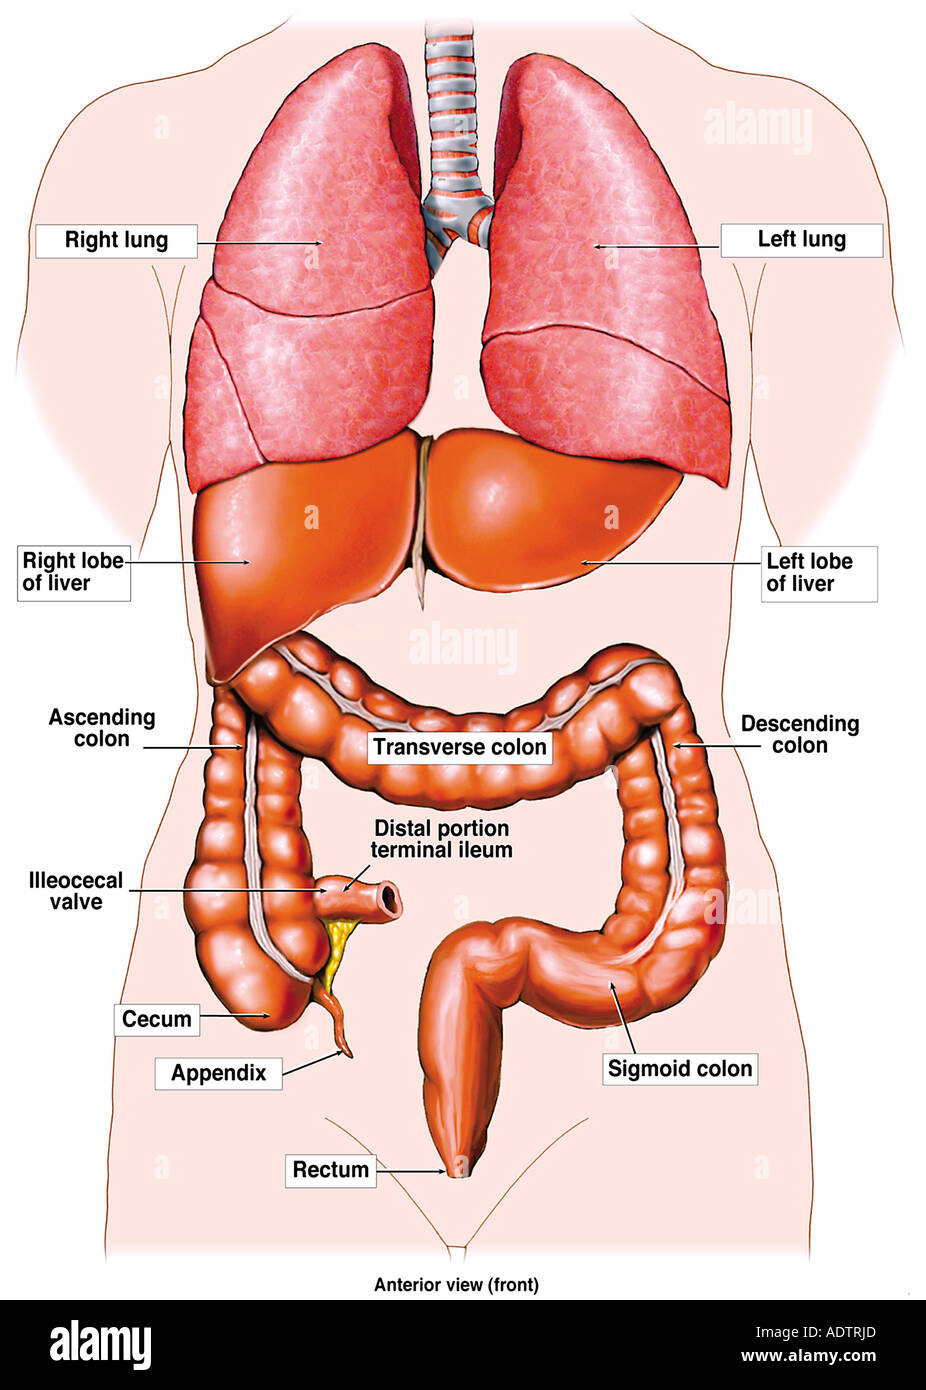 ileocecal sphincter digestive system